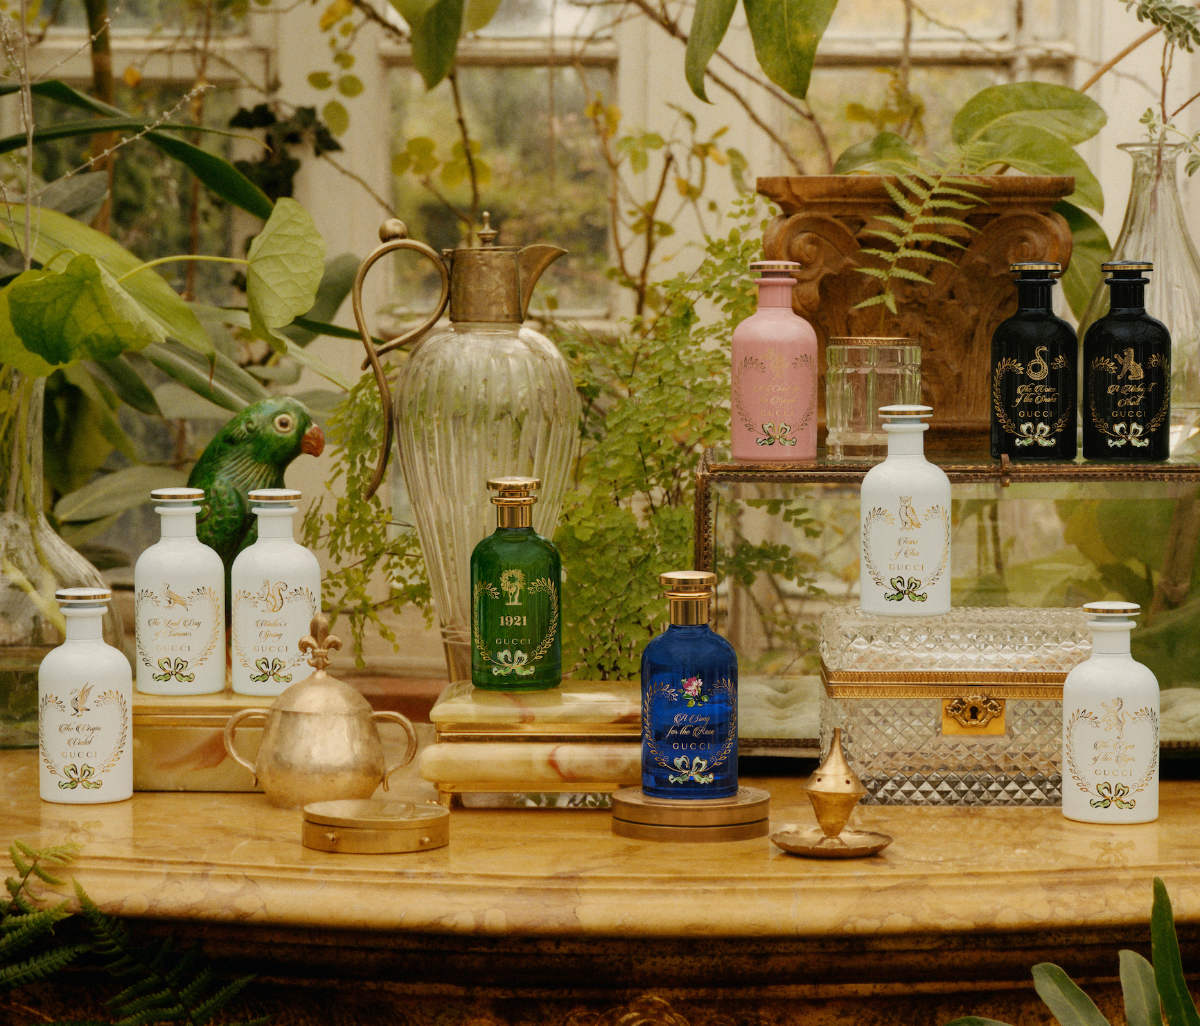 The Alchemist’s Garden Welcomes 1921: A New Eau De Parfum Celebrating 100 Years Of Gucci